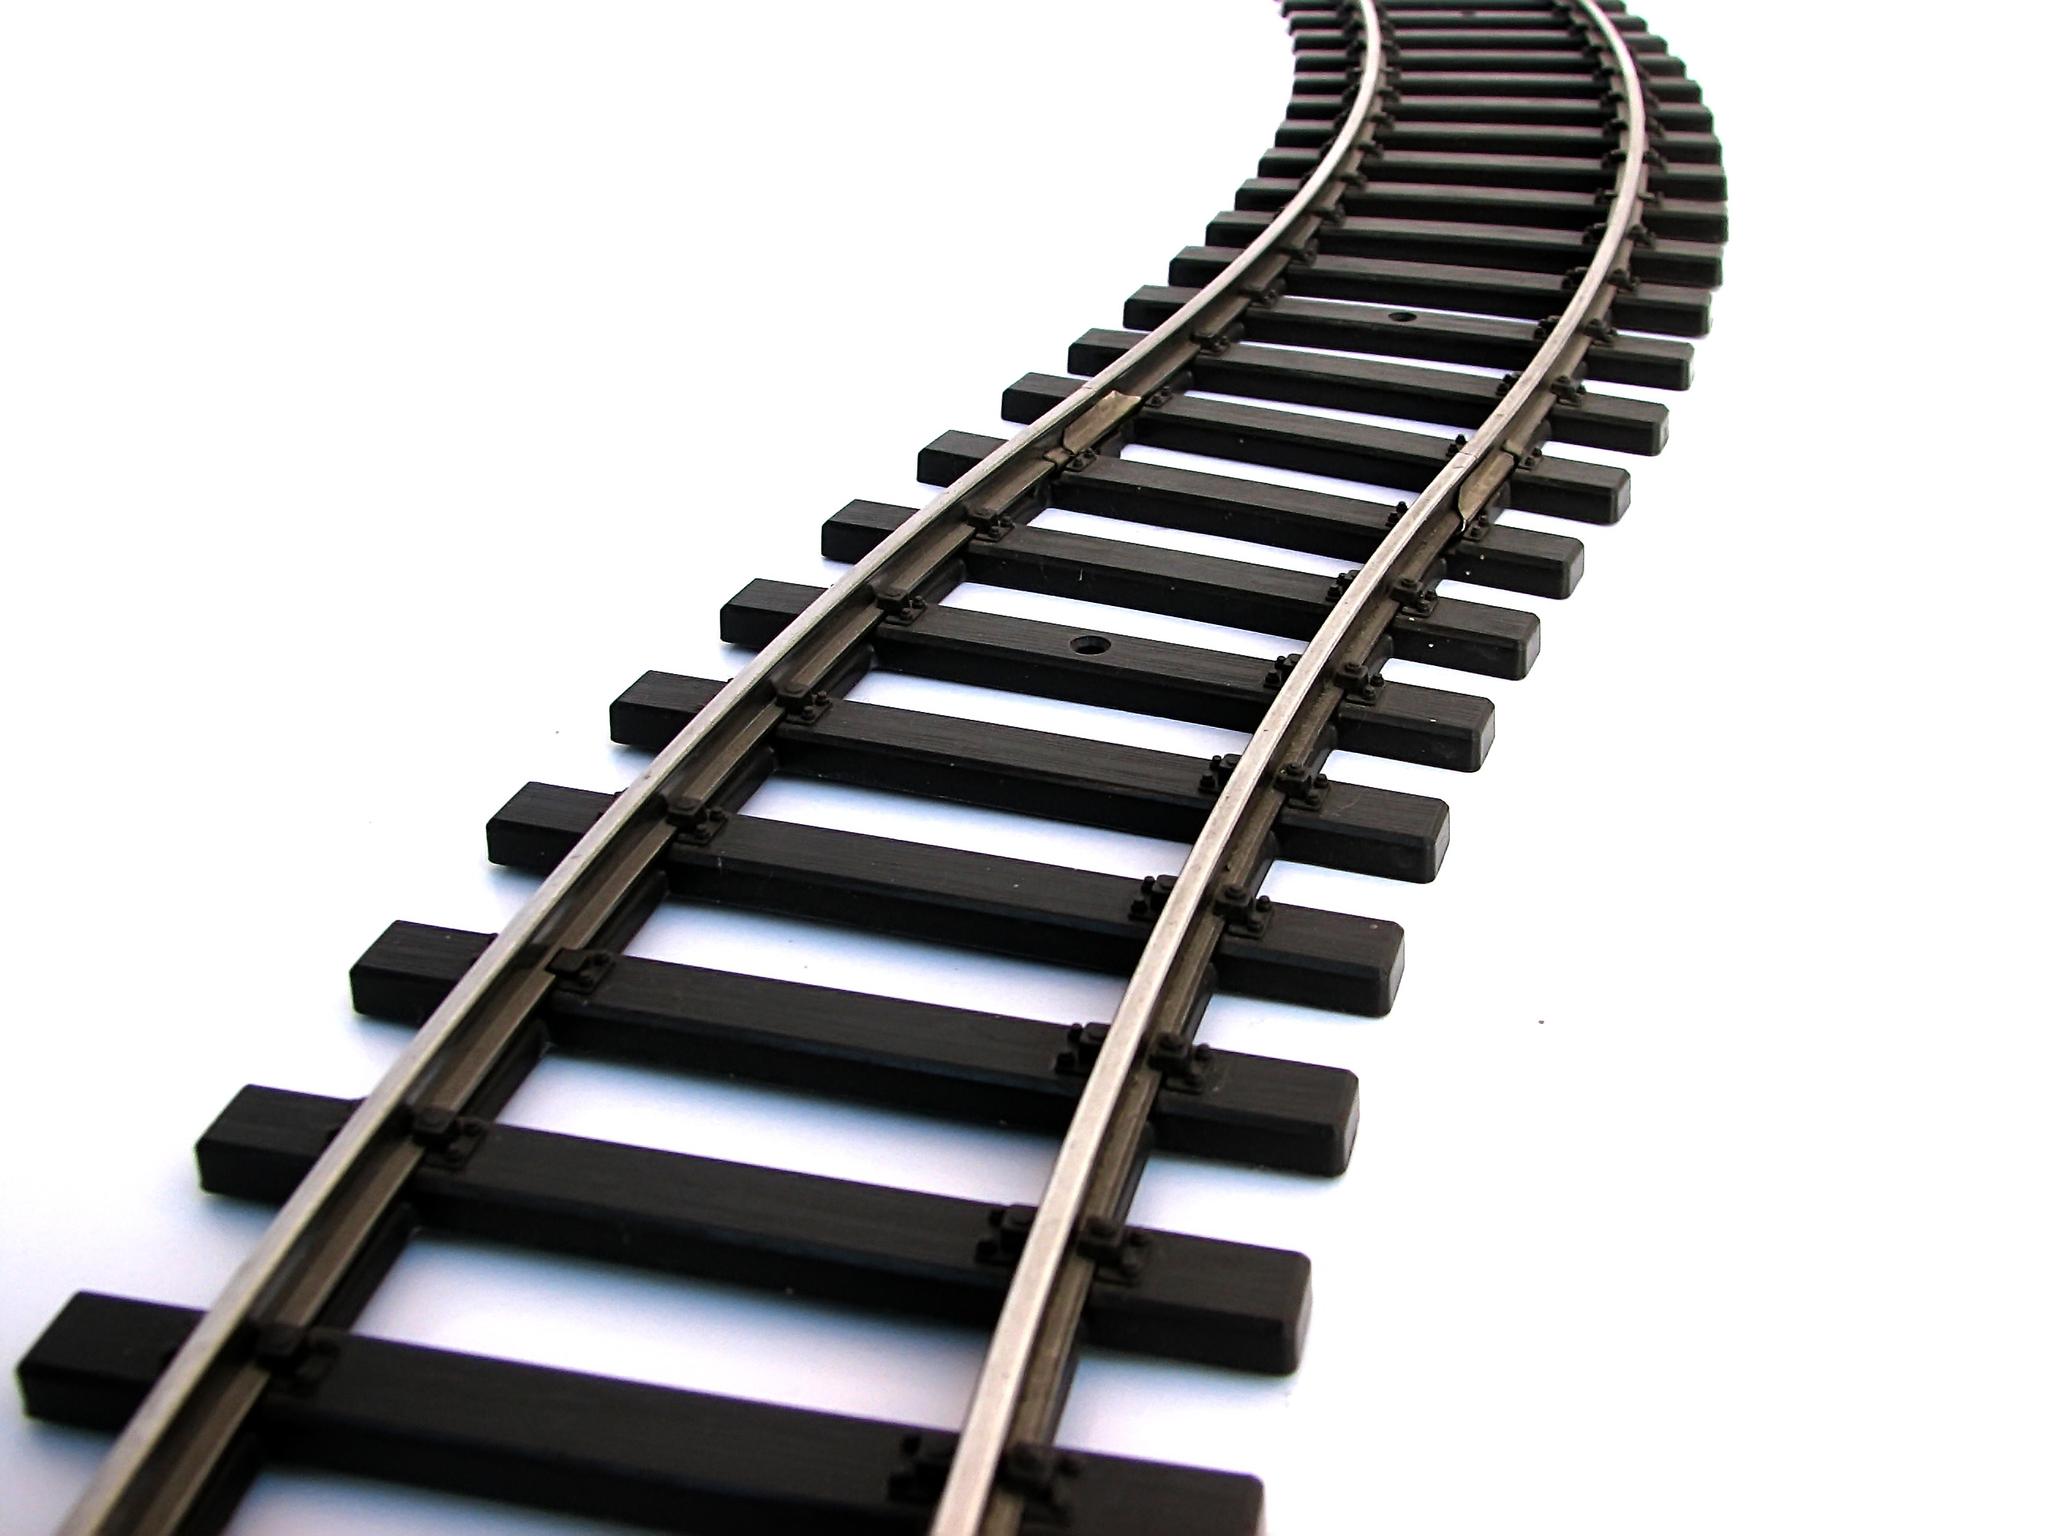 Railway rails clipart - Clipground